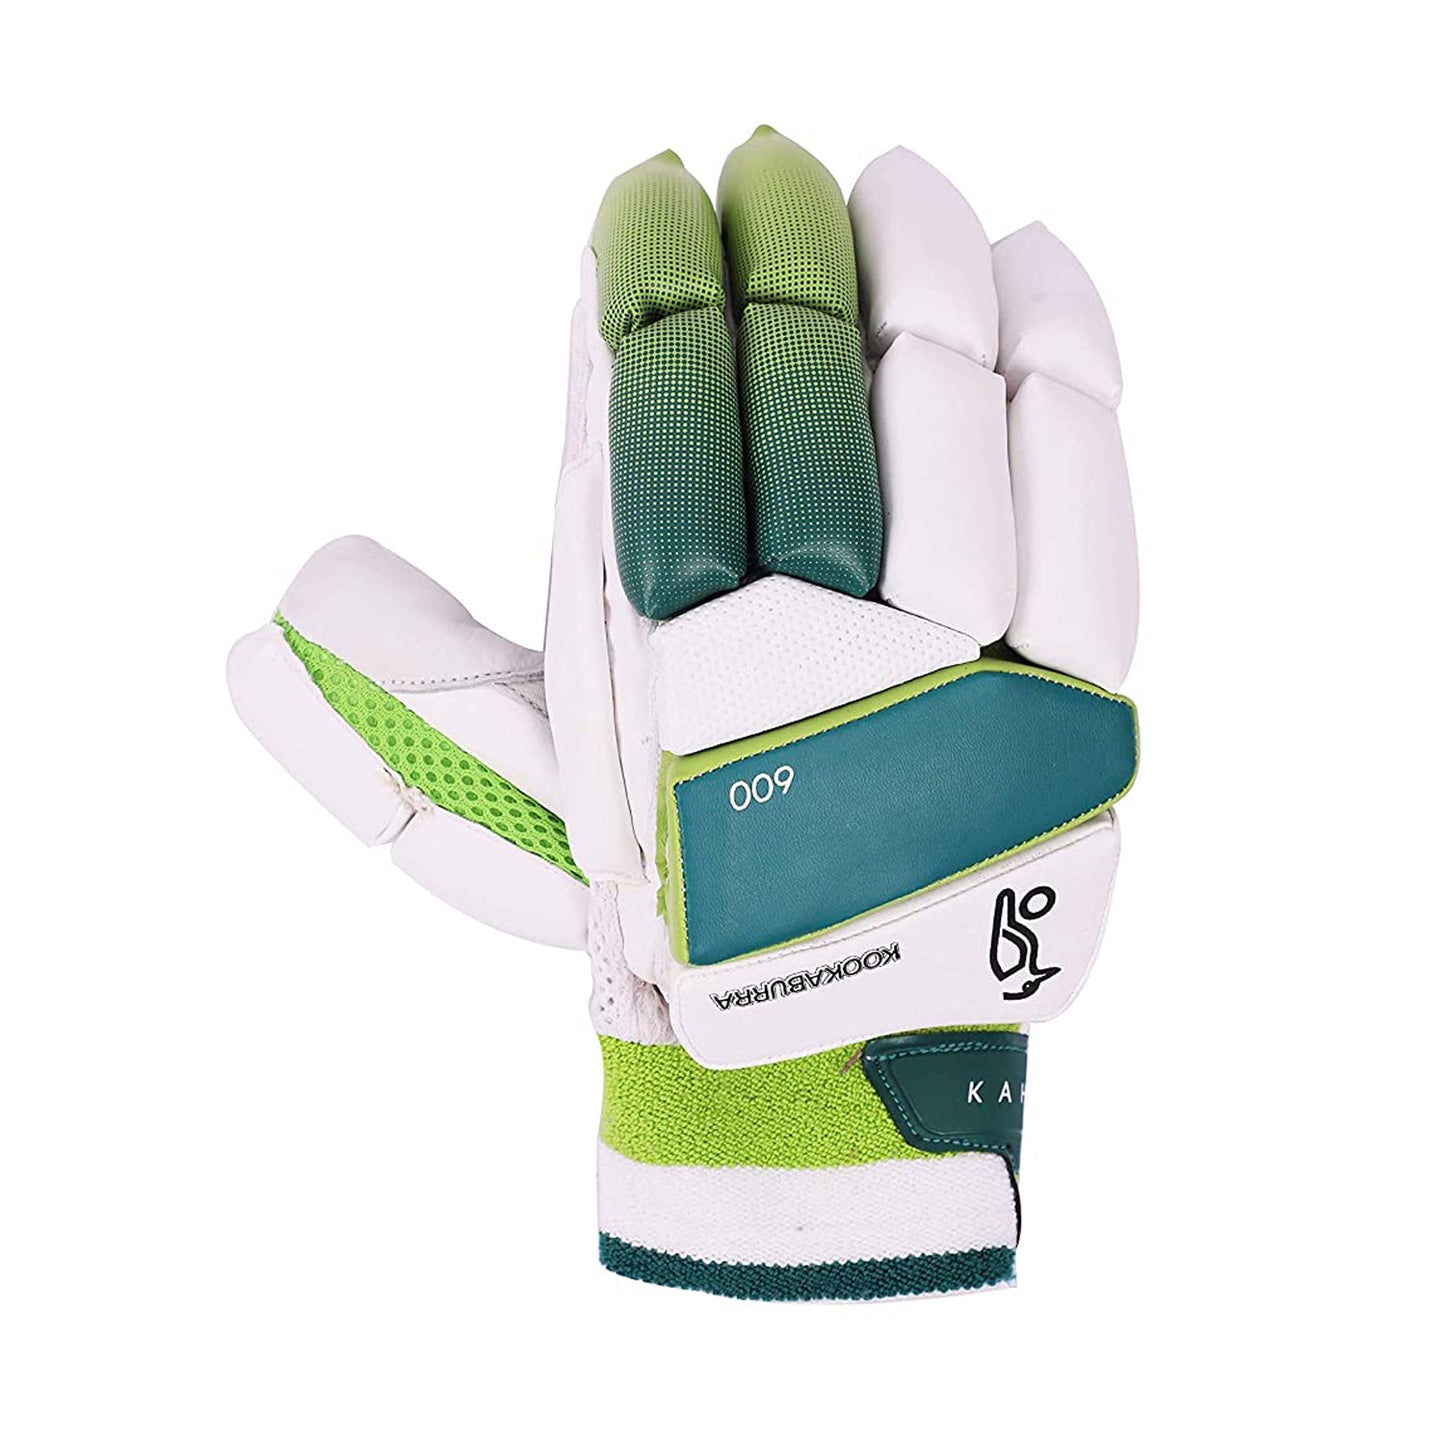 Kookaburra Kahuna 600 RH Batting Gloves - Best Price online Prokicksports.com